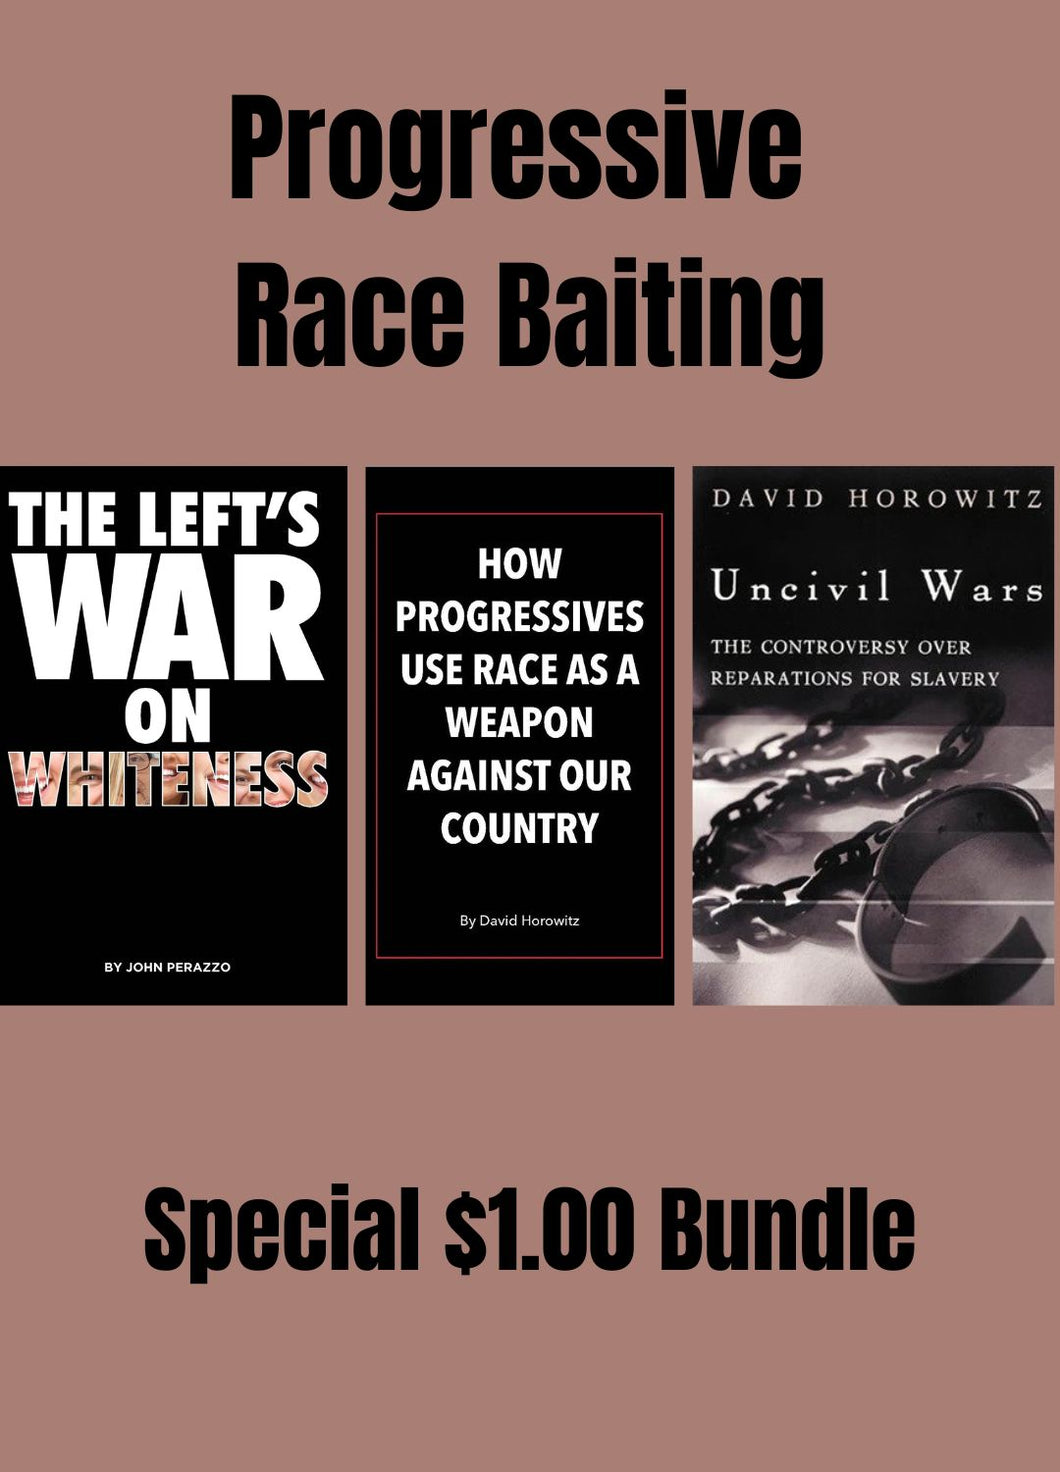 Special $1.00 Bundle: Progressive Race Baiting